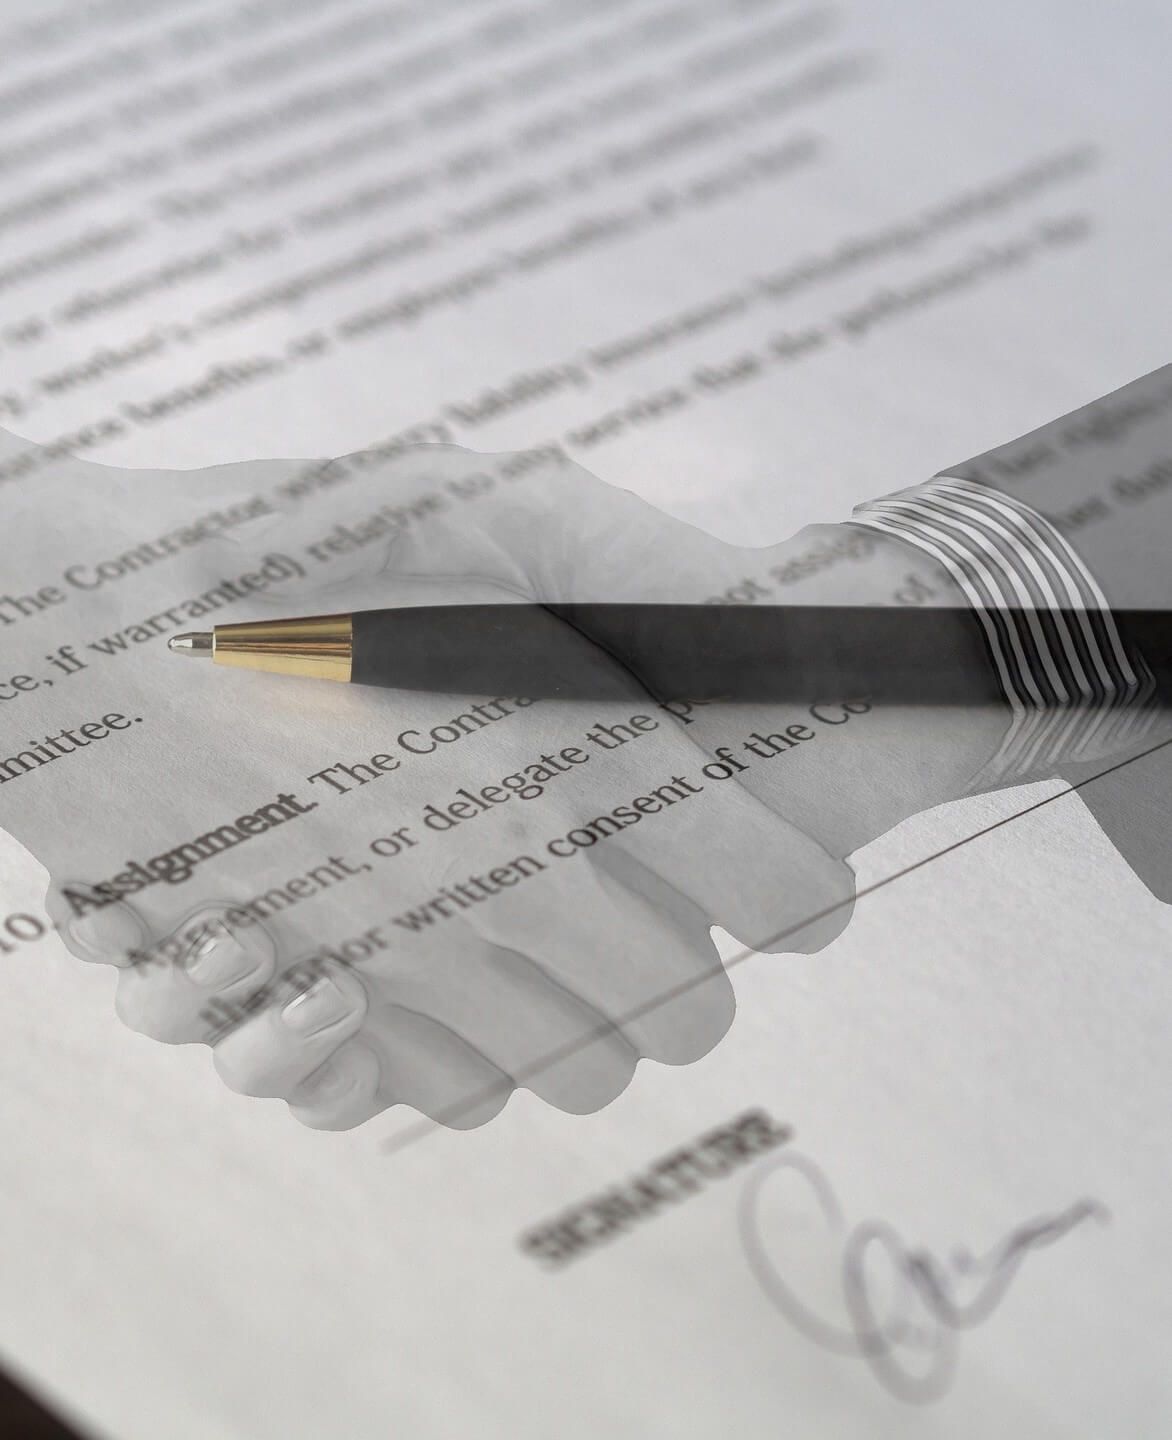 advance directives pen legal document hands shaking